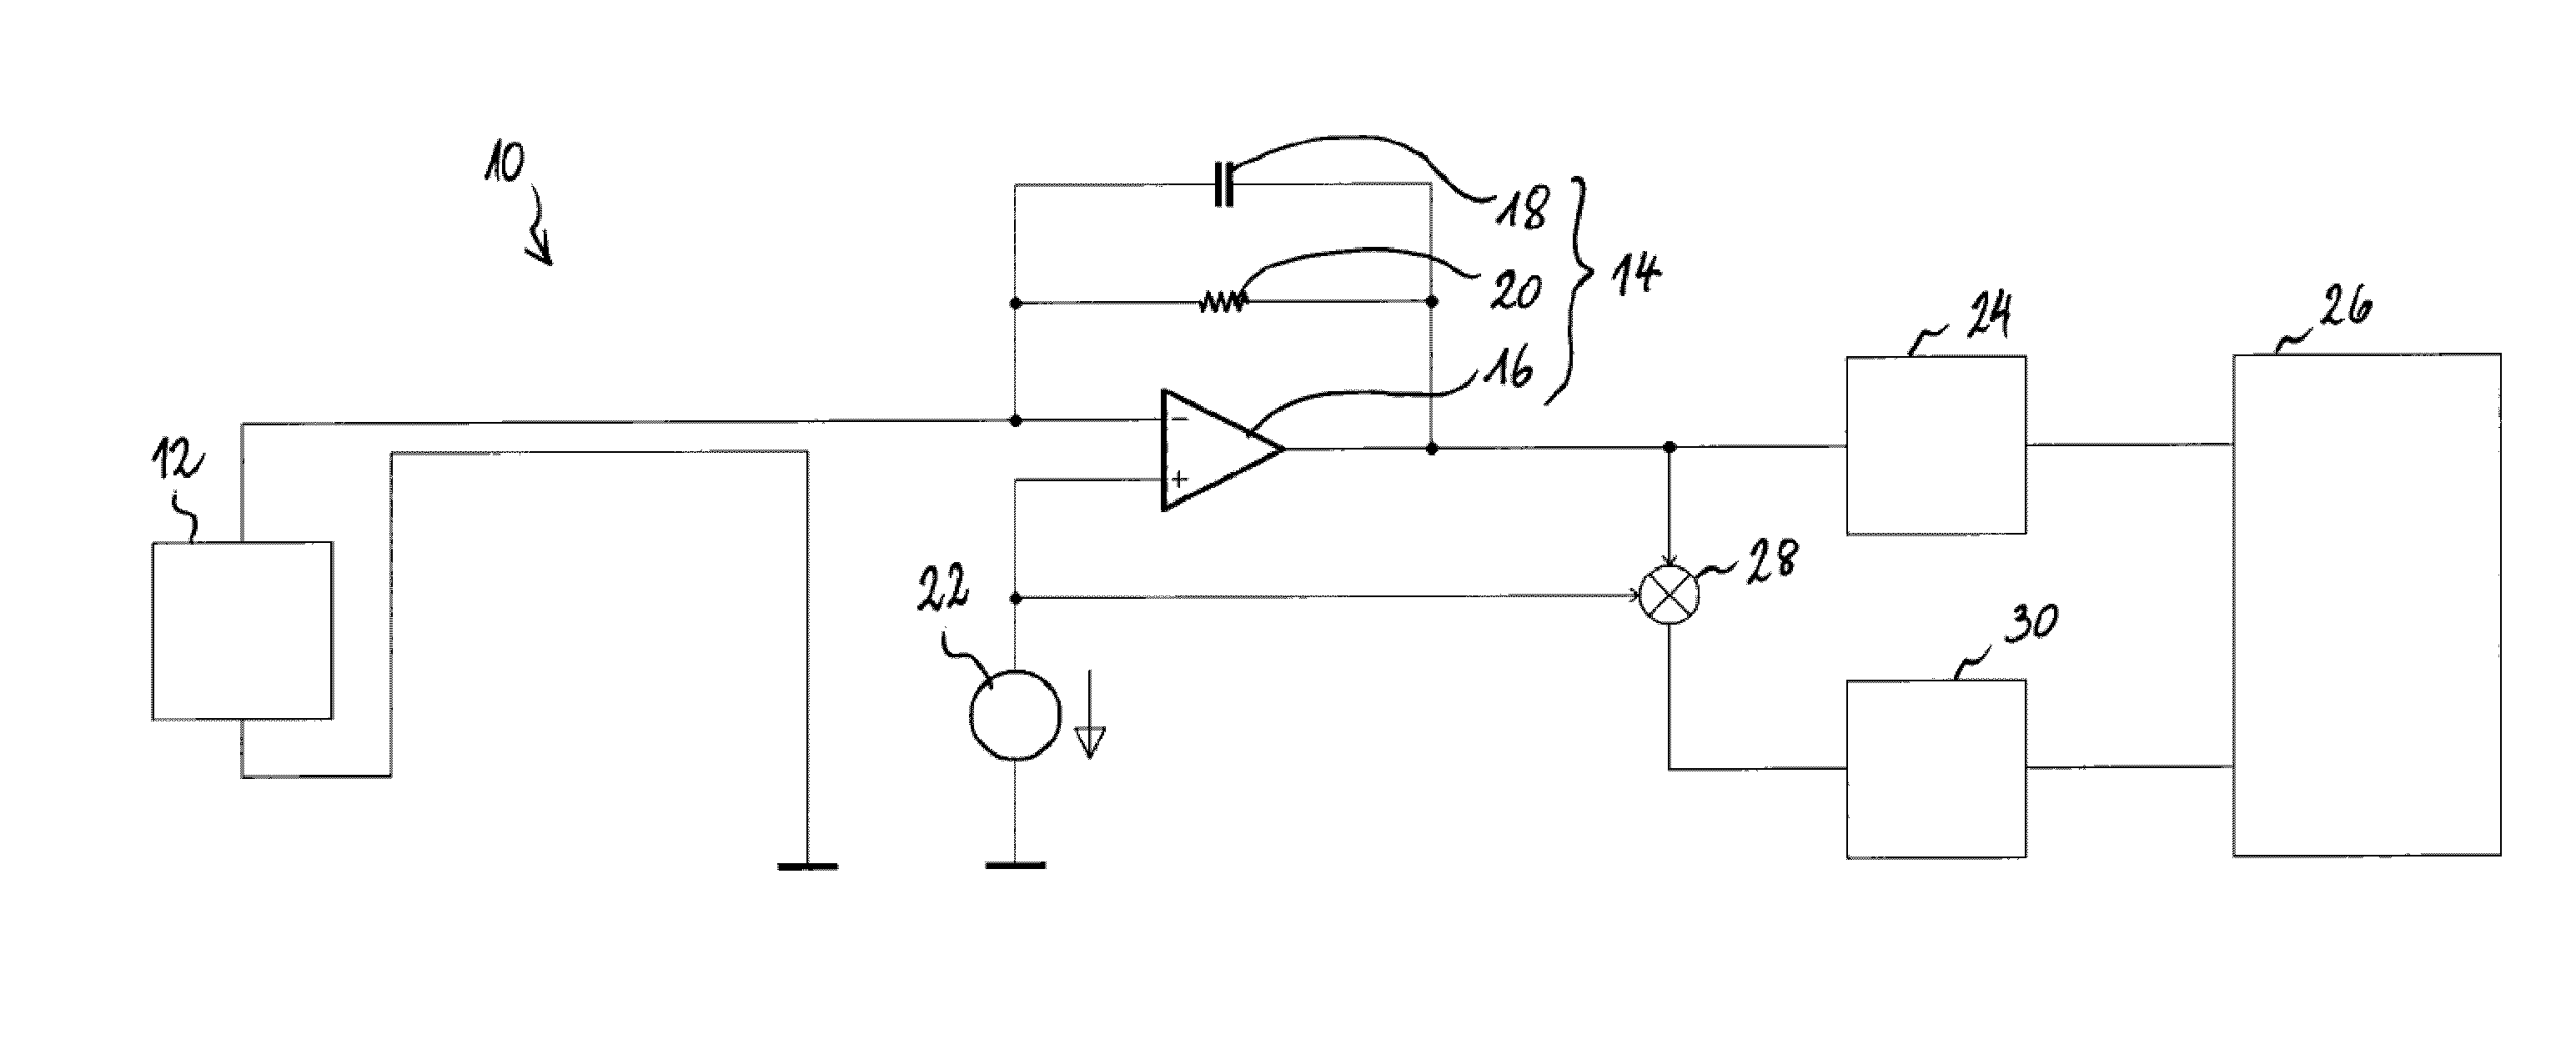 Piezoelectric or electret sensing device